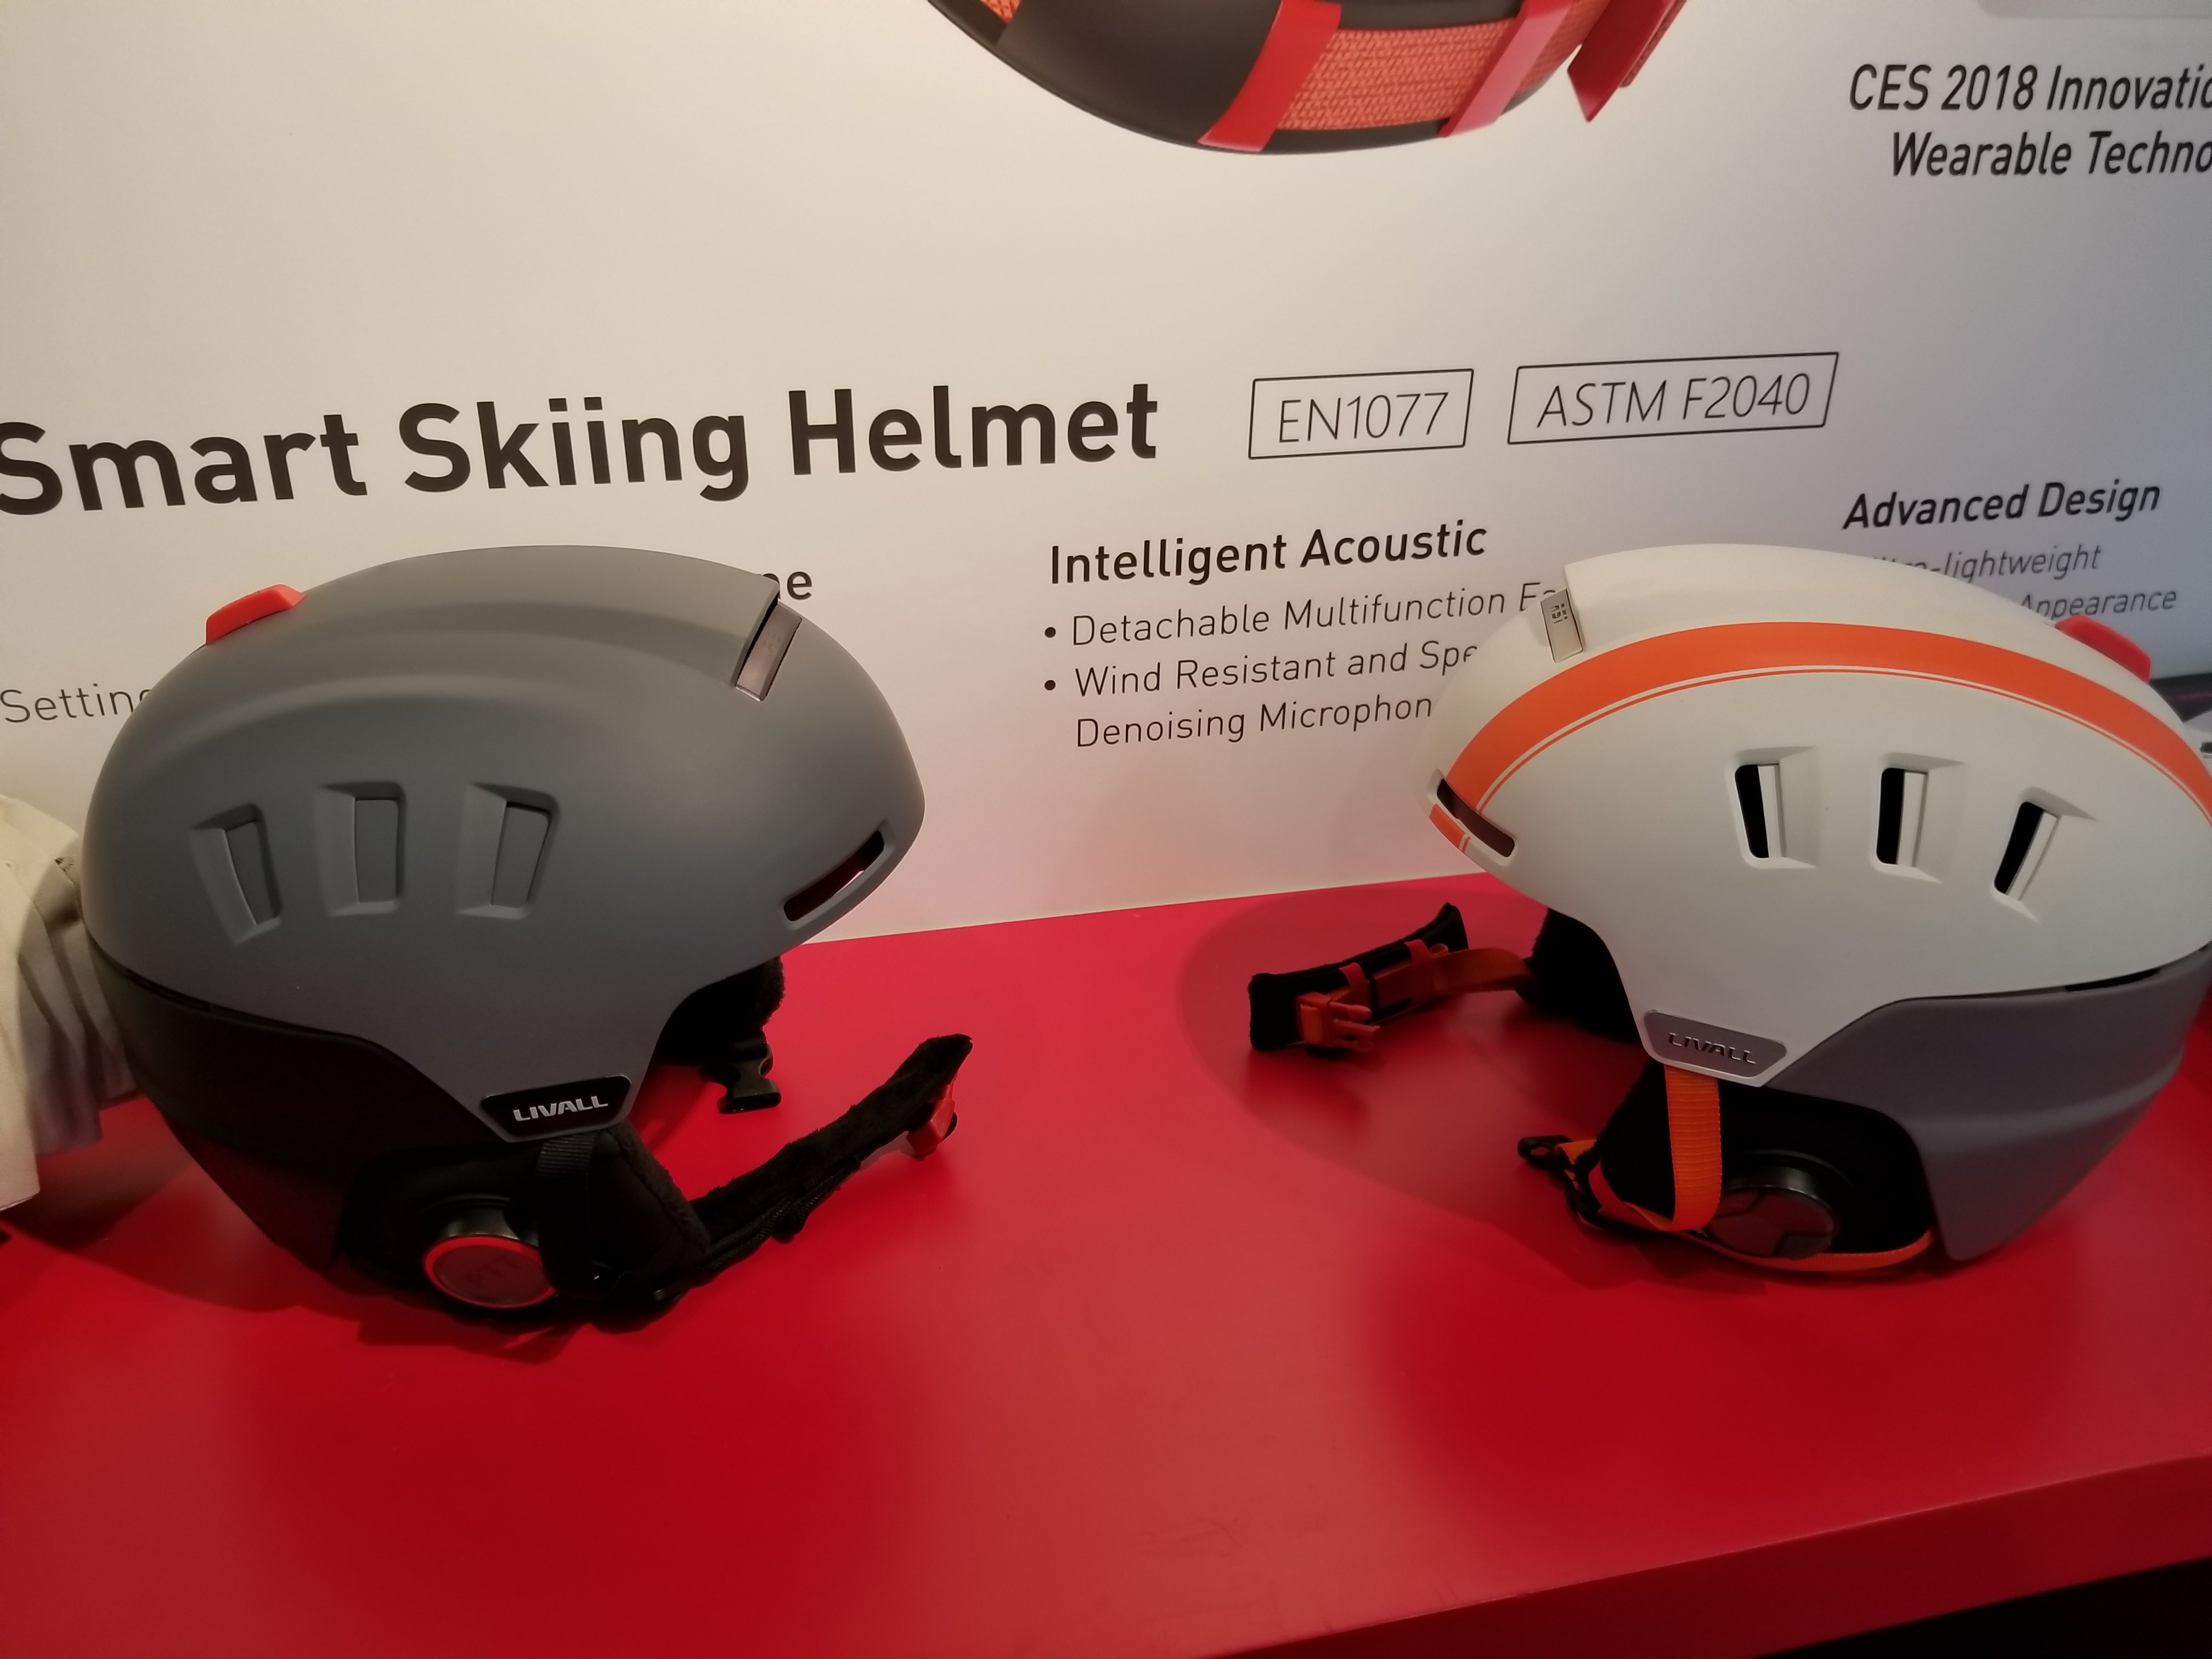 Livall's smart ski helmet. Image credit: Peter Brown/Electronics360.